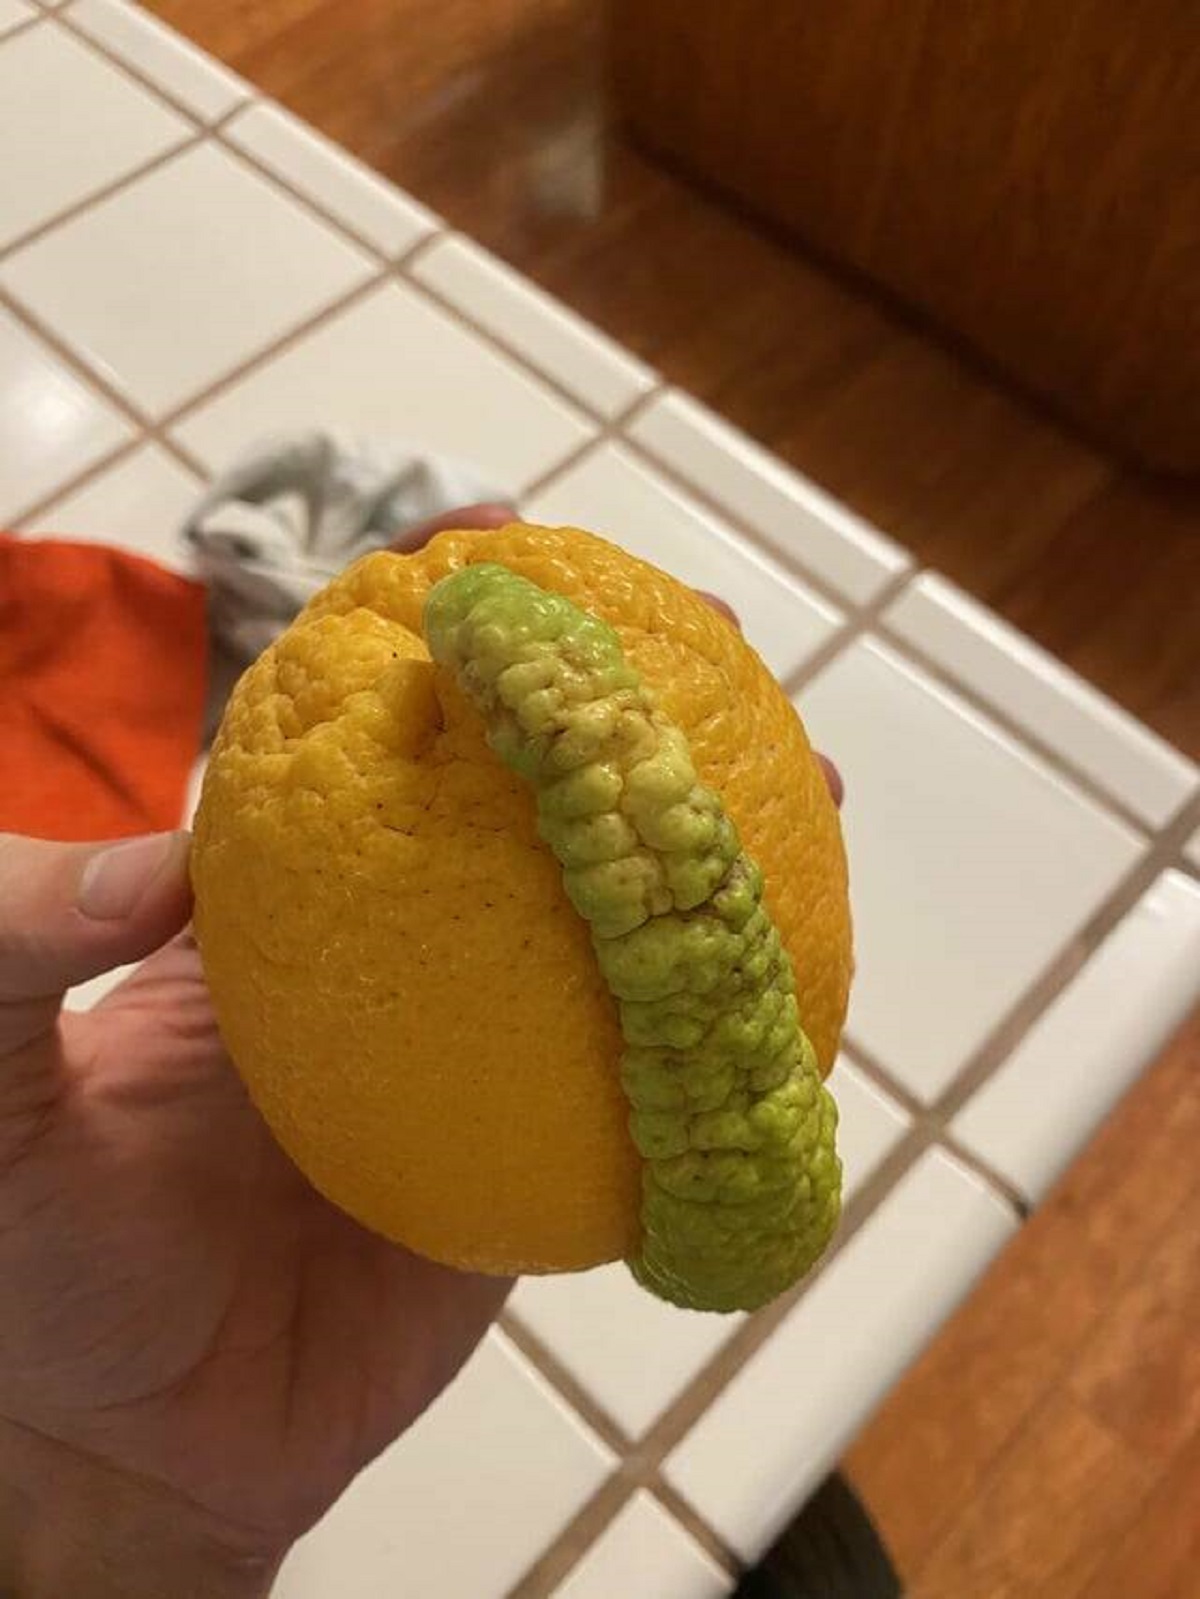 "My orange had a single slice that grew incorrectly."